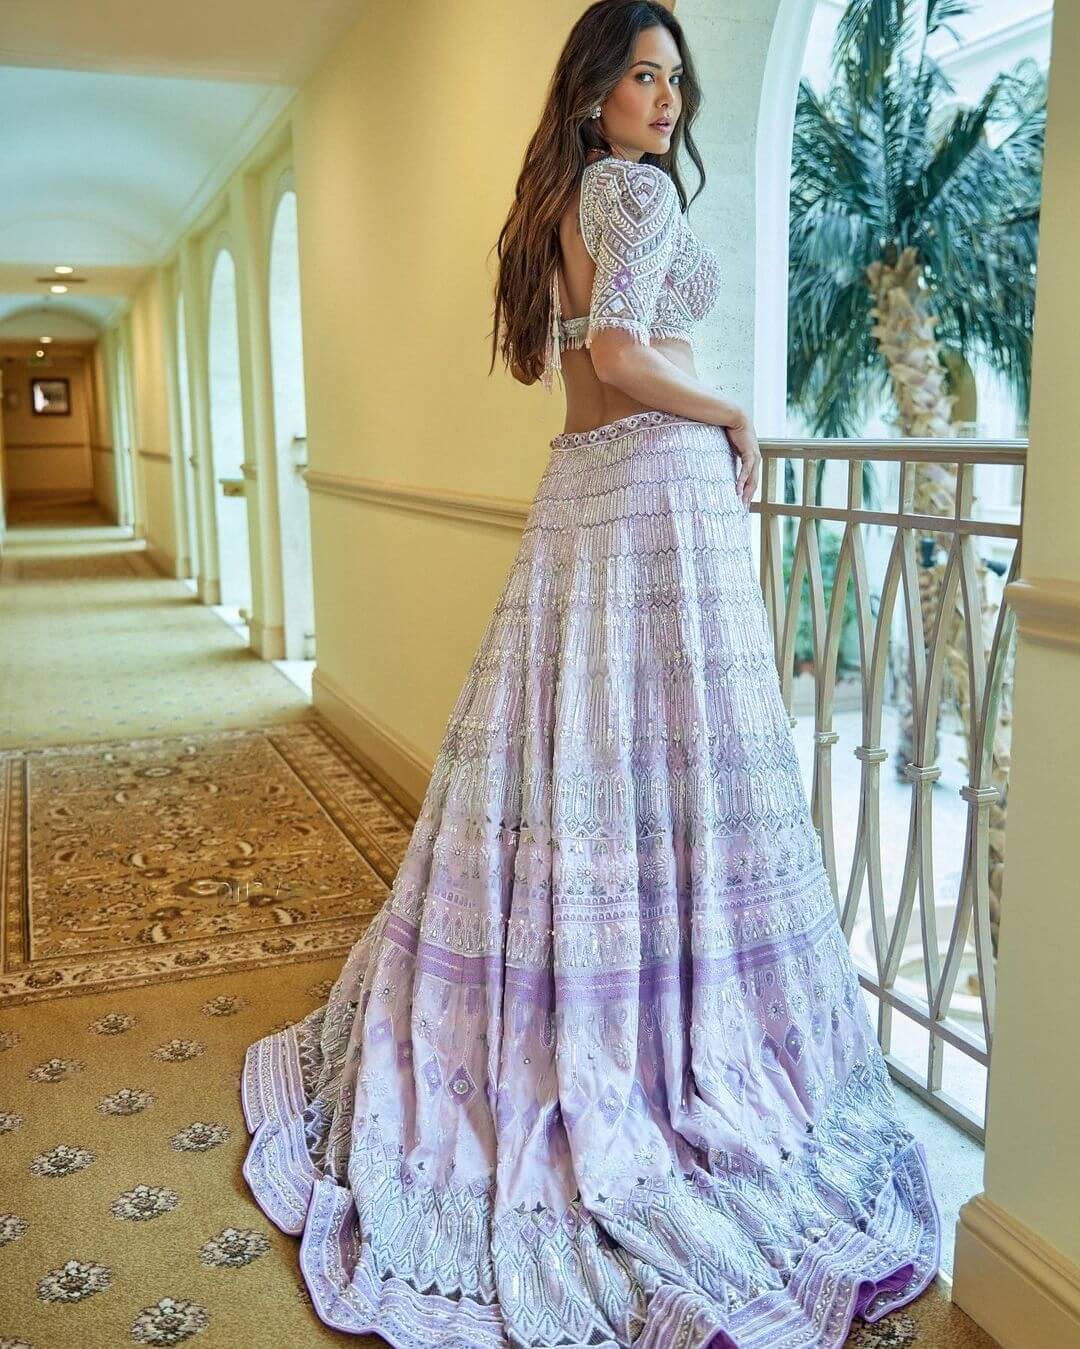 Princess Esha Gupta: A Lavish Lavender Lehenga Look